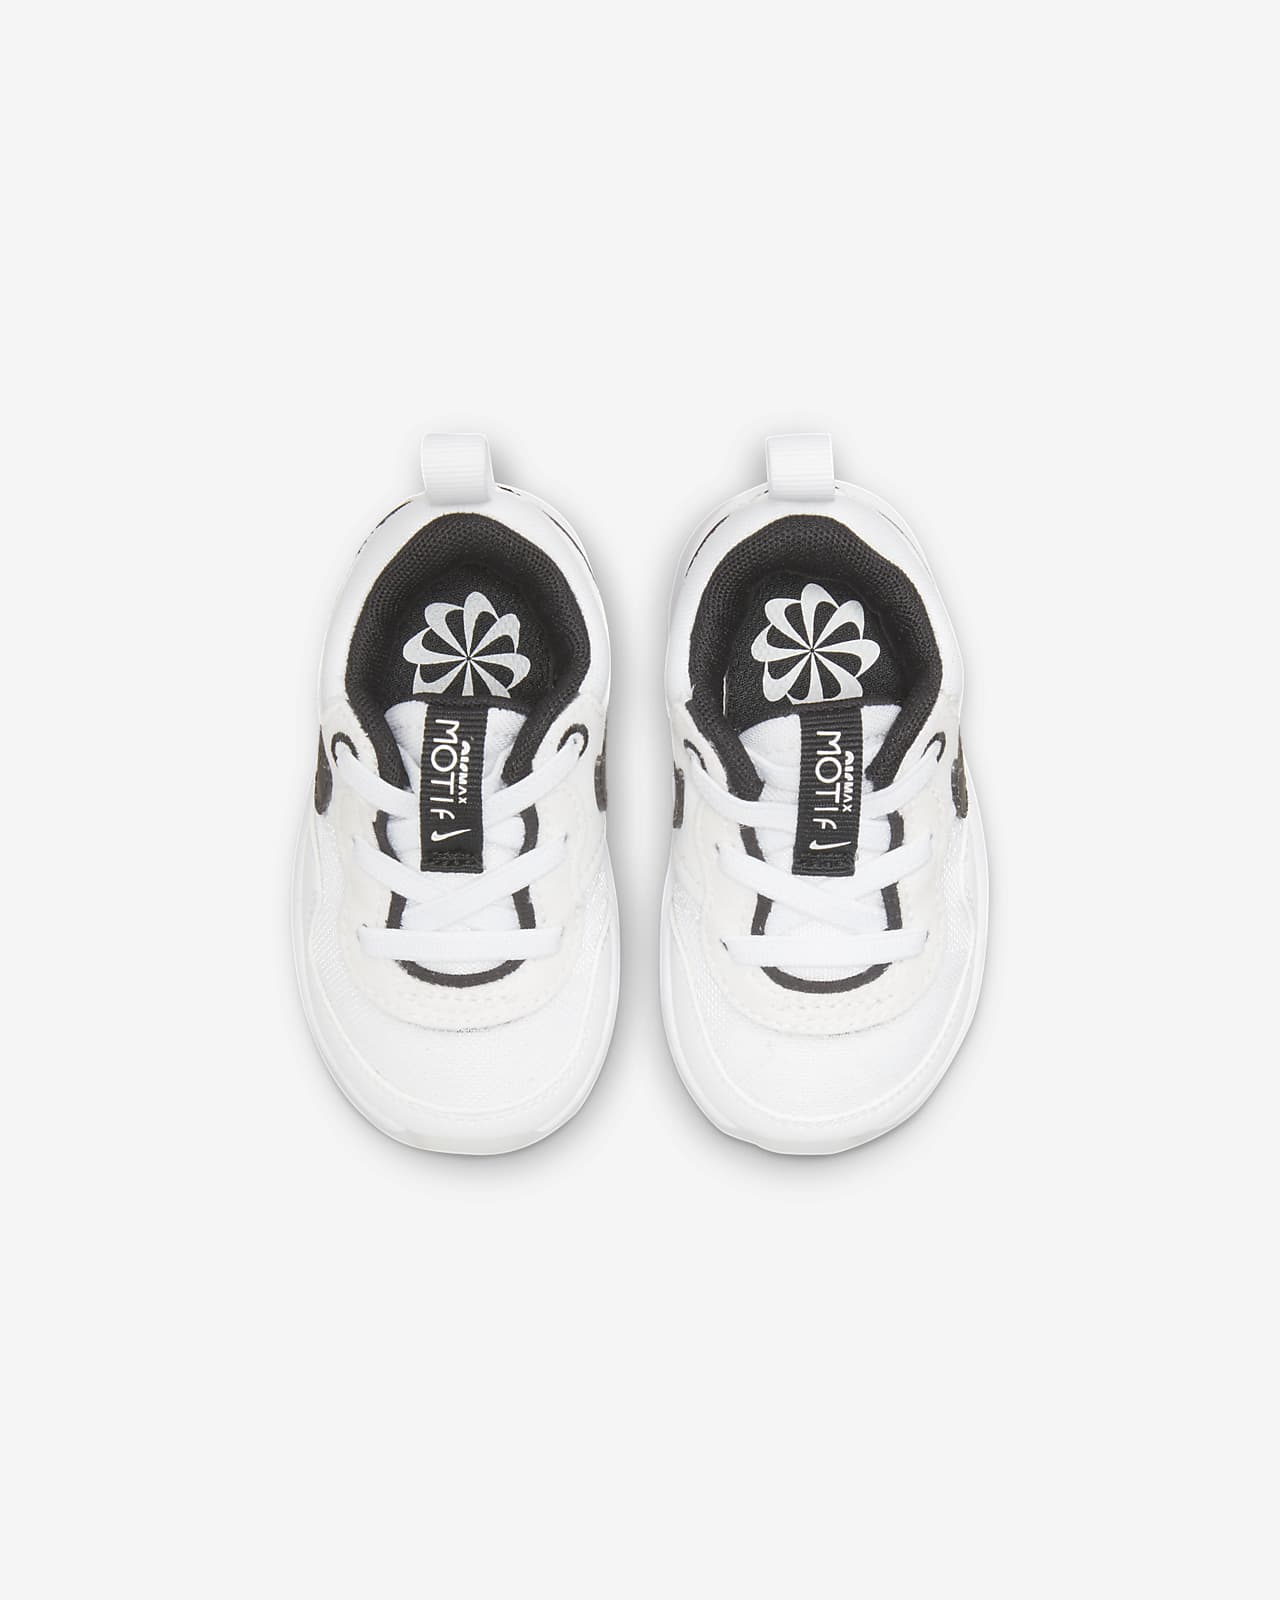 Nike Air Shoes. Max Motif Baby/Toddler